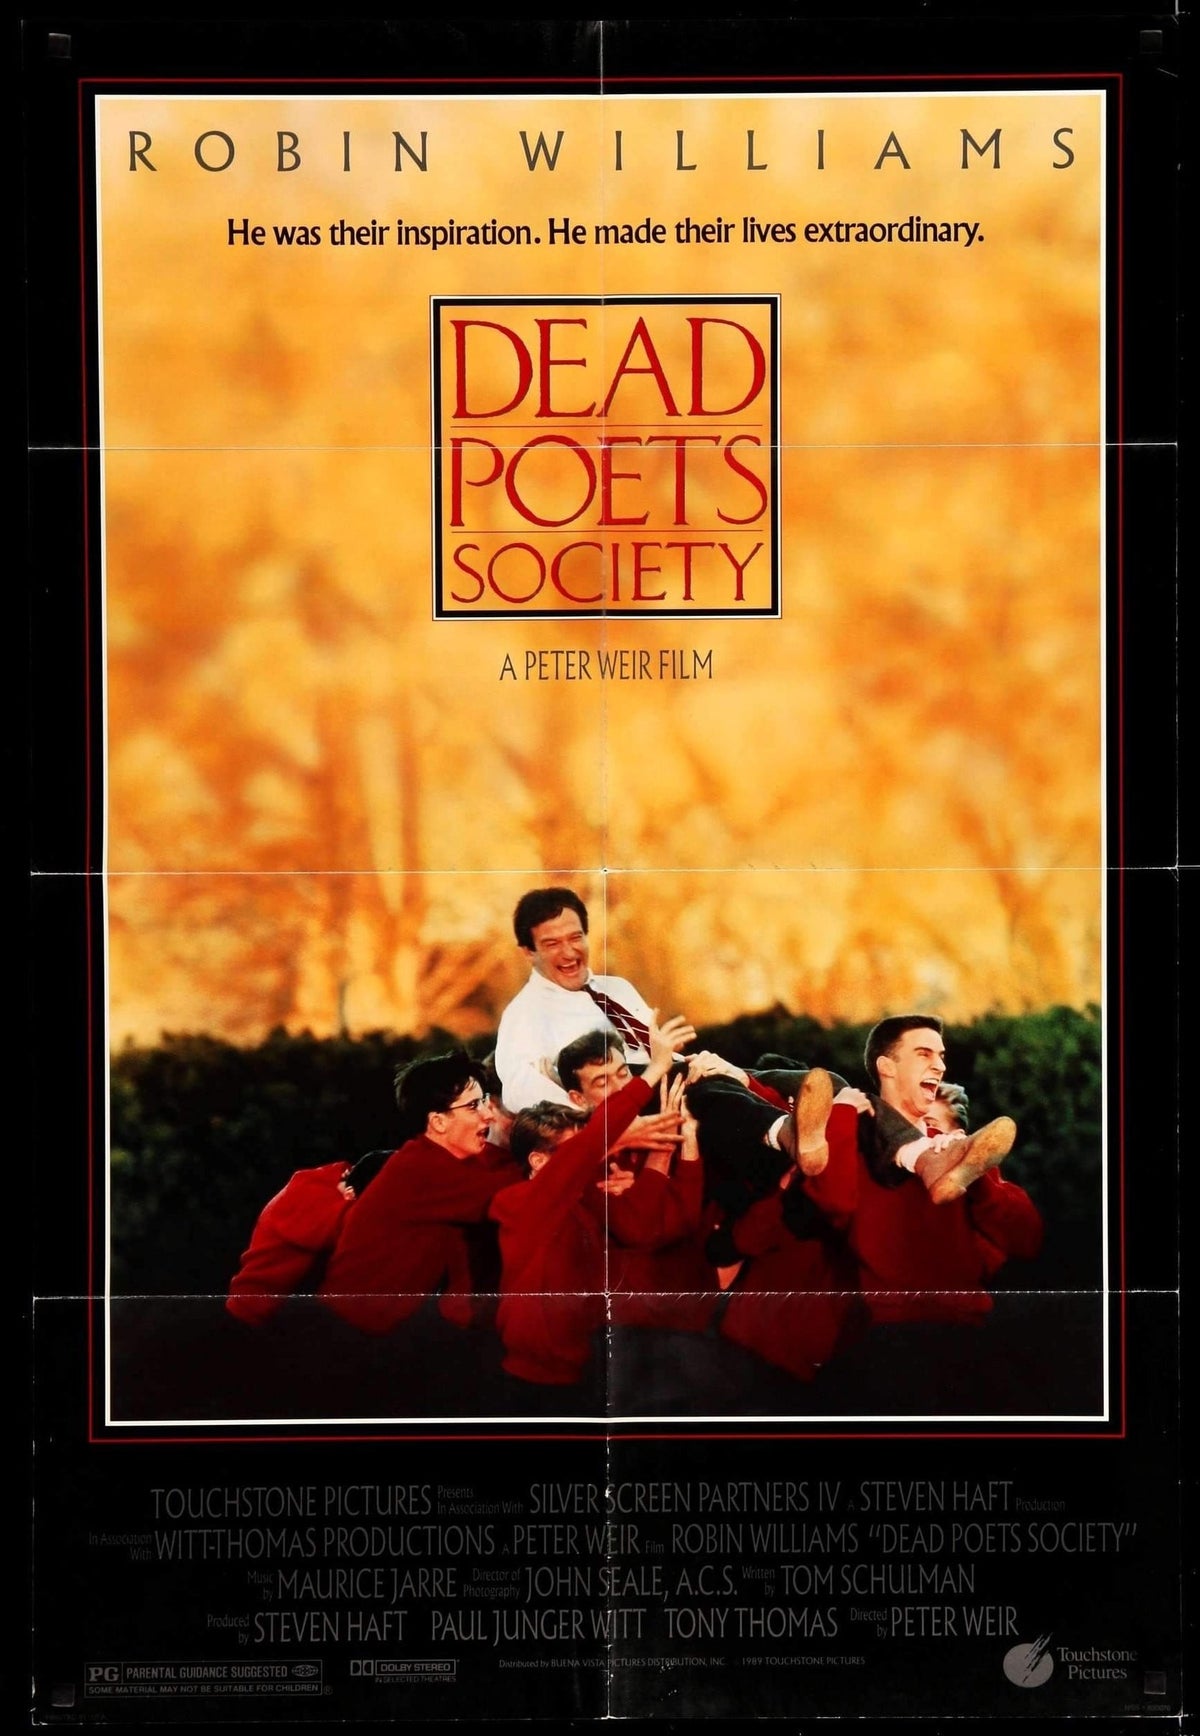 Dead Poets Society (1989) original movie poster for sale at Original Film Art